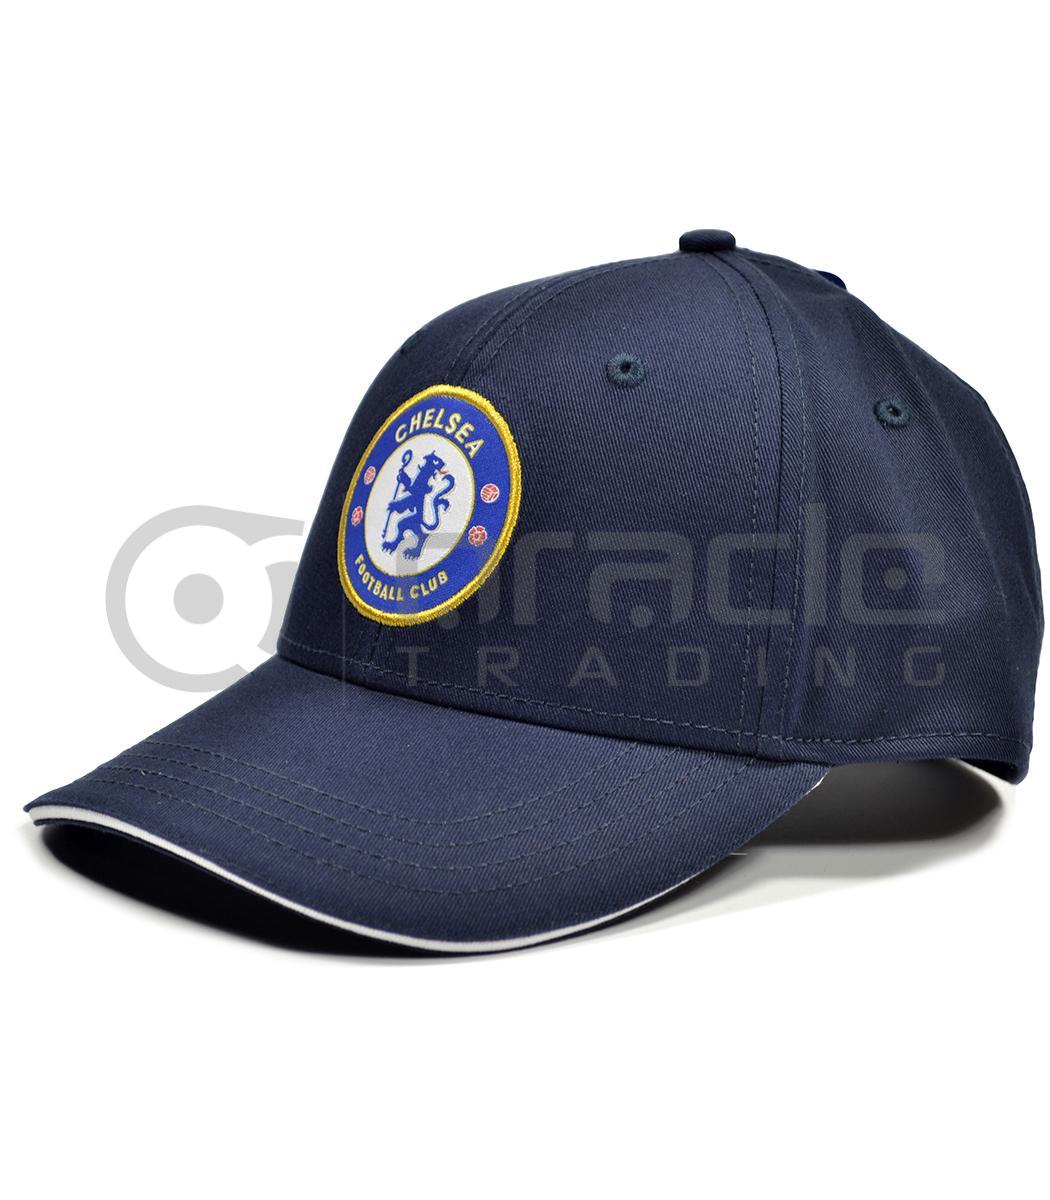 Chelsea Navy Crest Hat